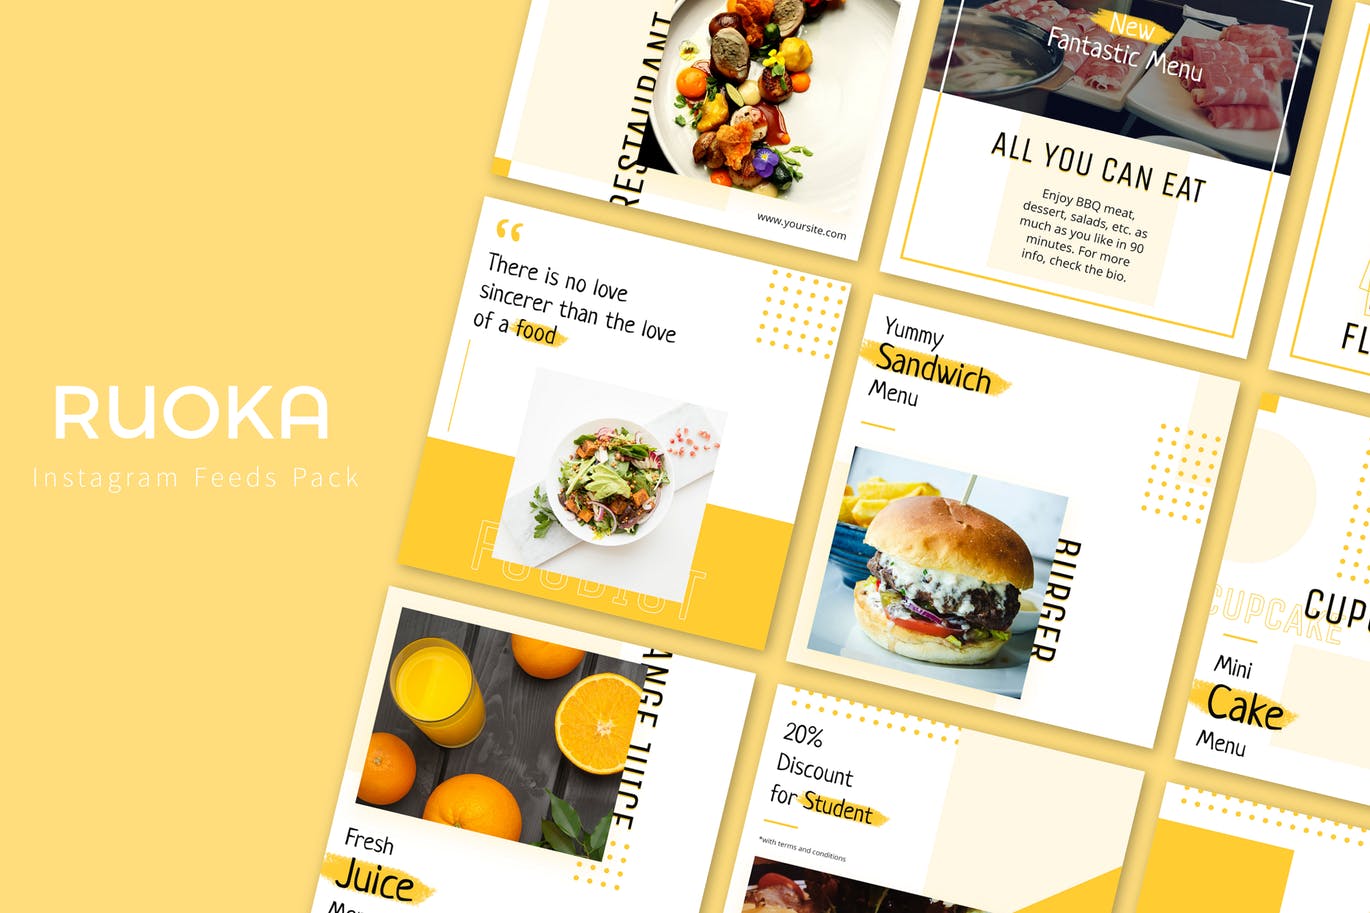 Instagram社交媒体美食主题信息流设计模板素材库精选 Ruoka – Instagram Feeds Pack插图